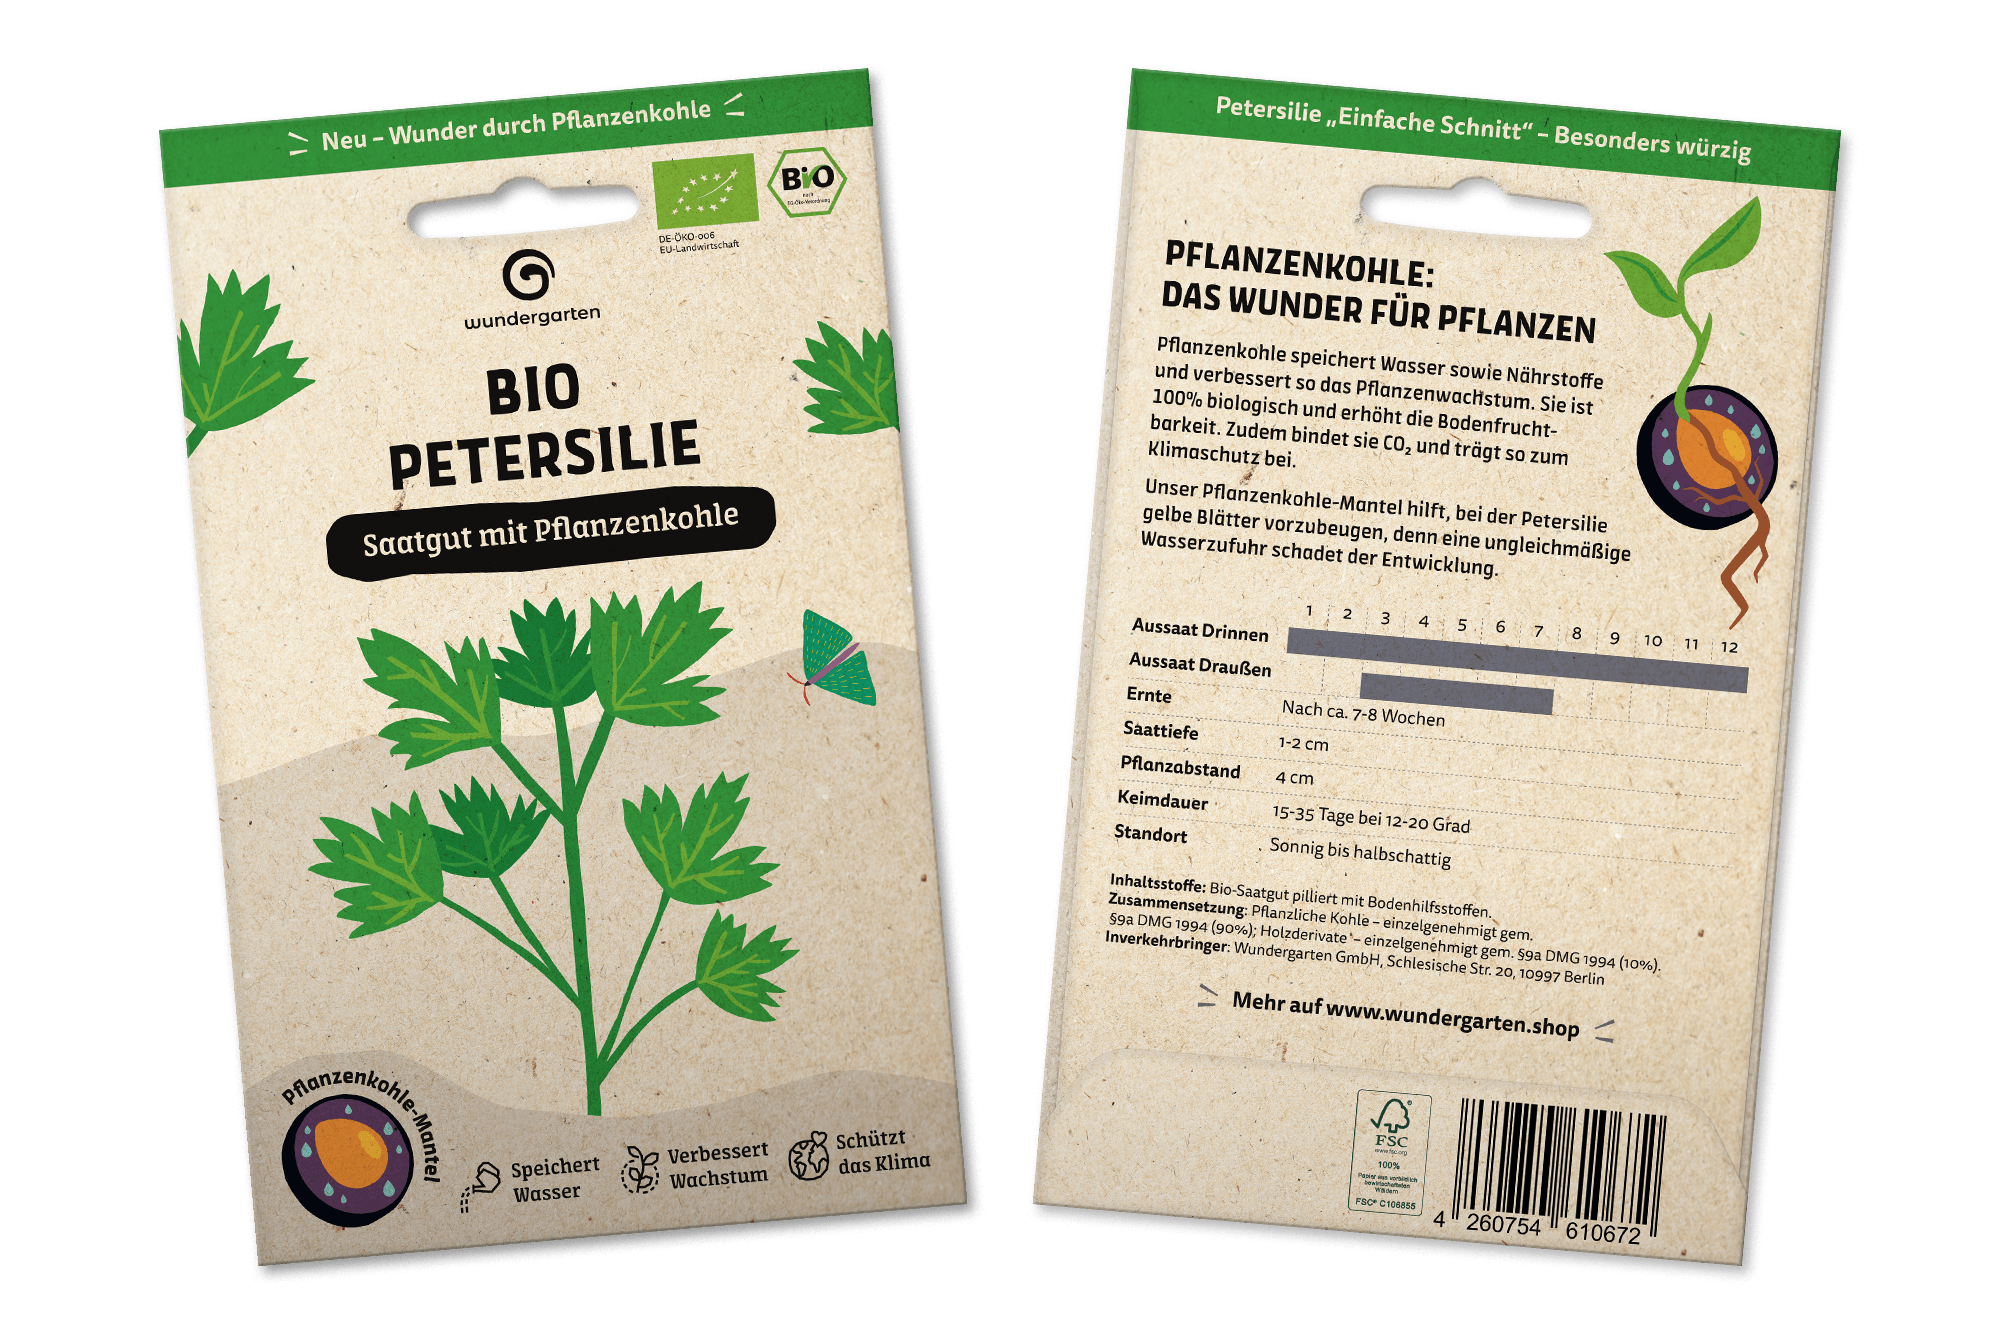 Bio Petersilie | Saatgut mit Pflanzenkohle-Mantel